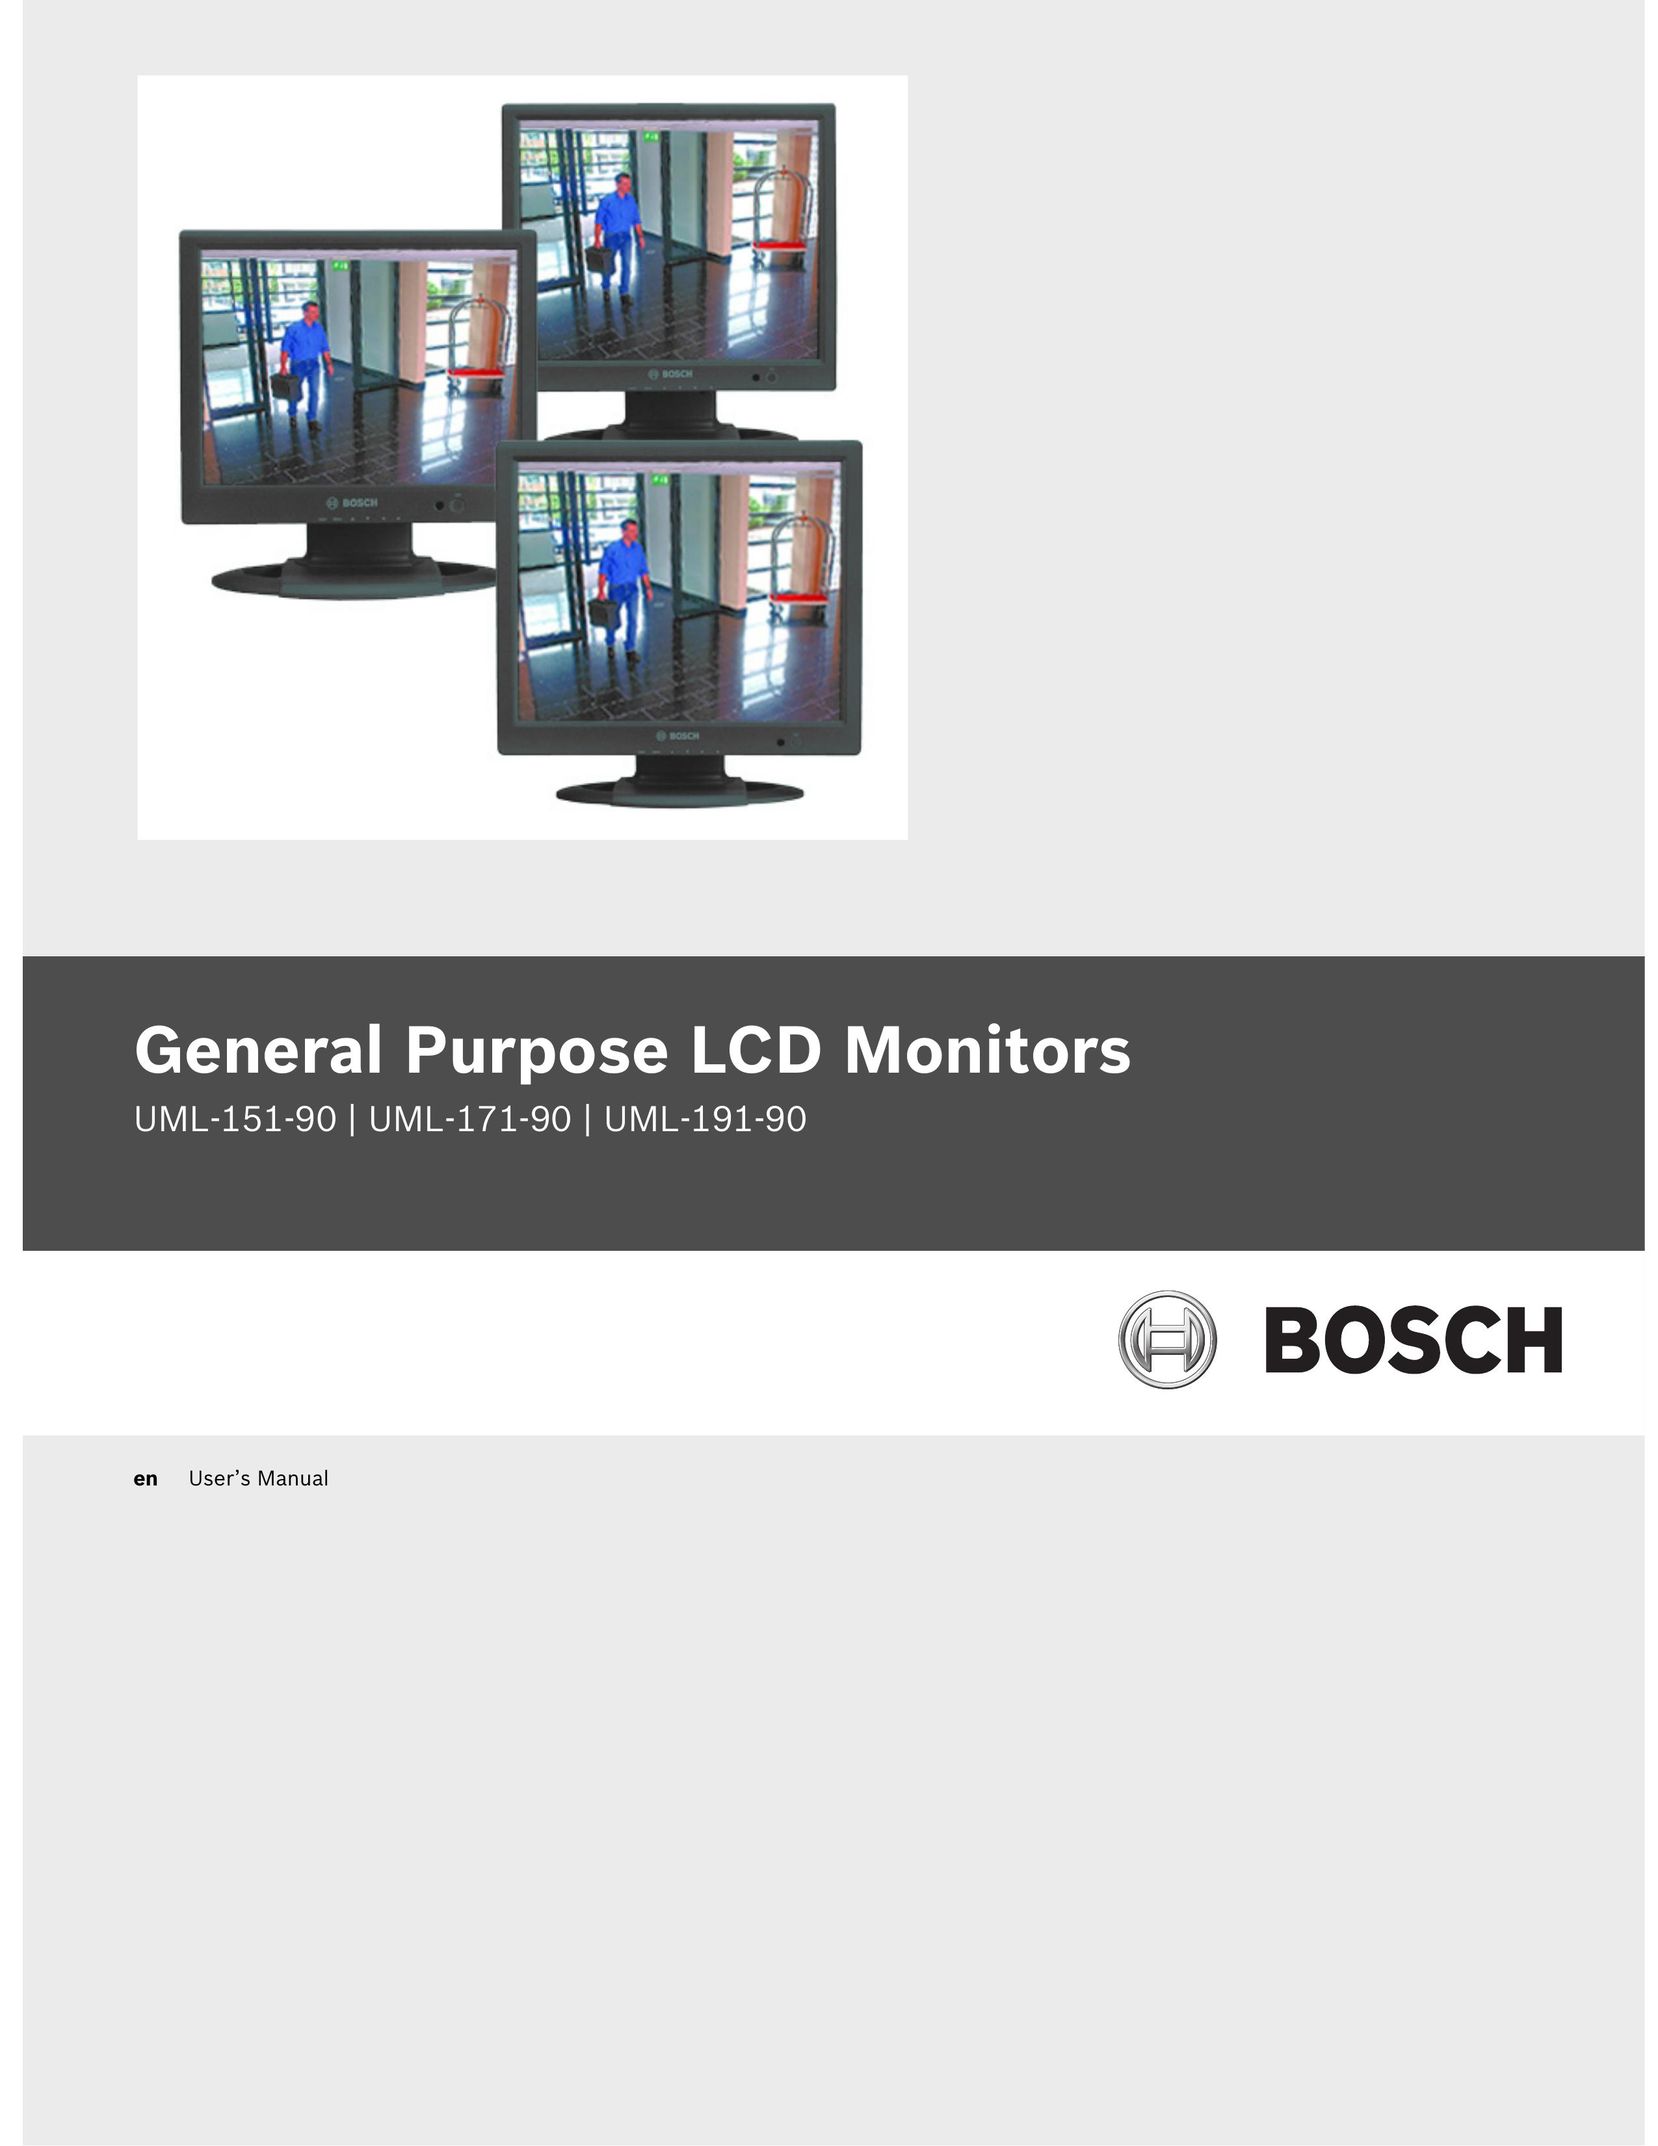 Bosch Appliances UML-171-90 Computer Monitor User Manual